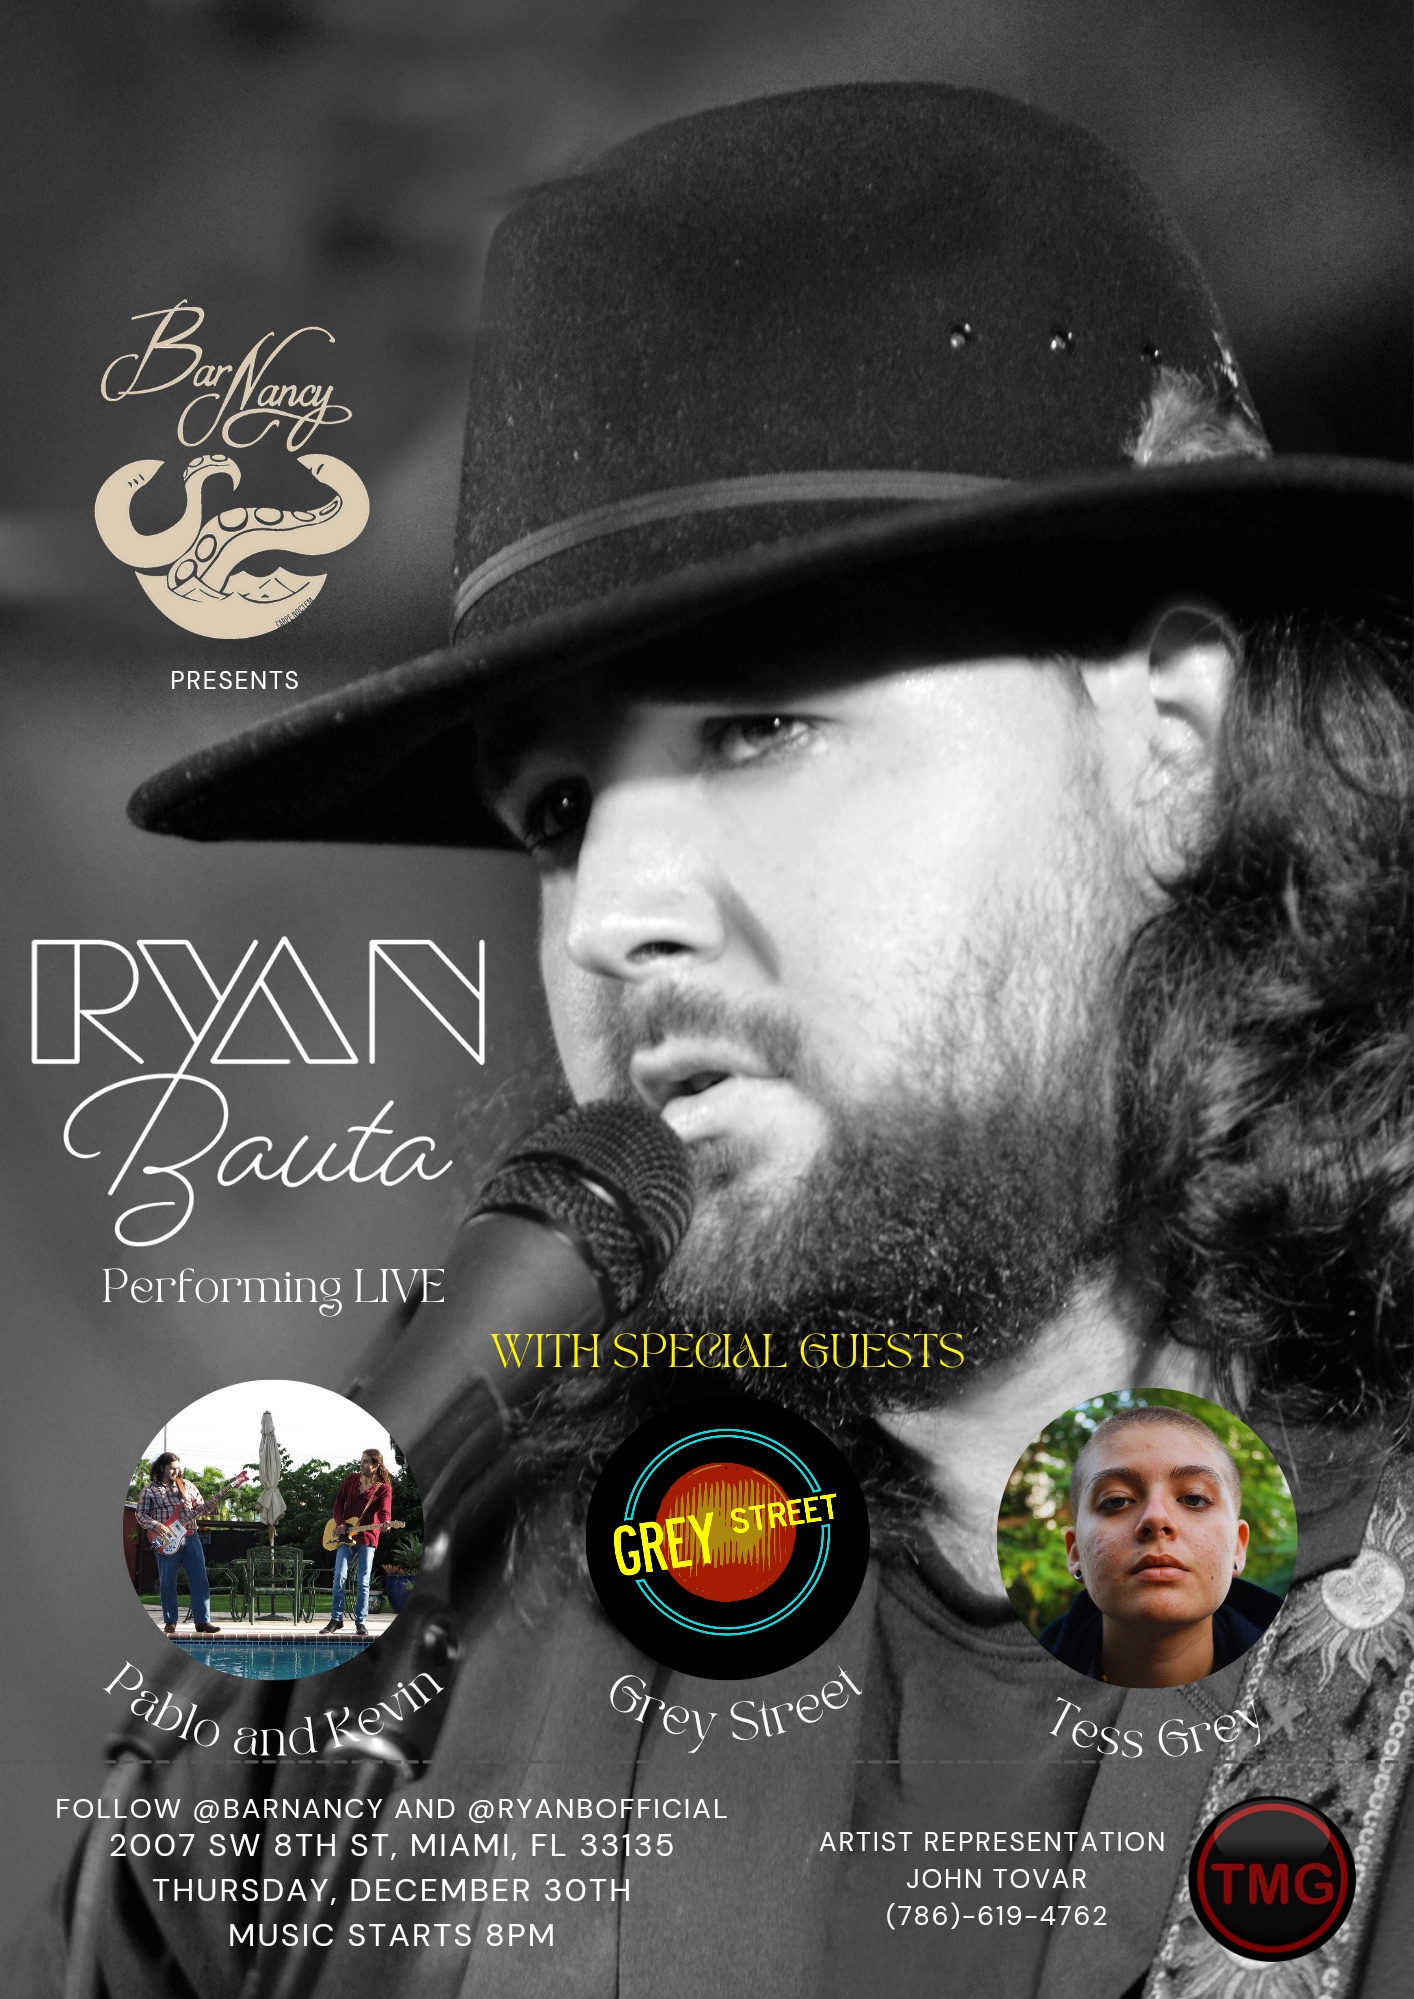 Ryan Bauta live at Bar Nancy - Dec 30th at 8PM